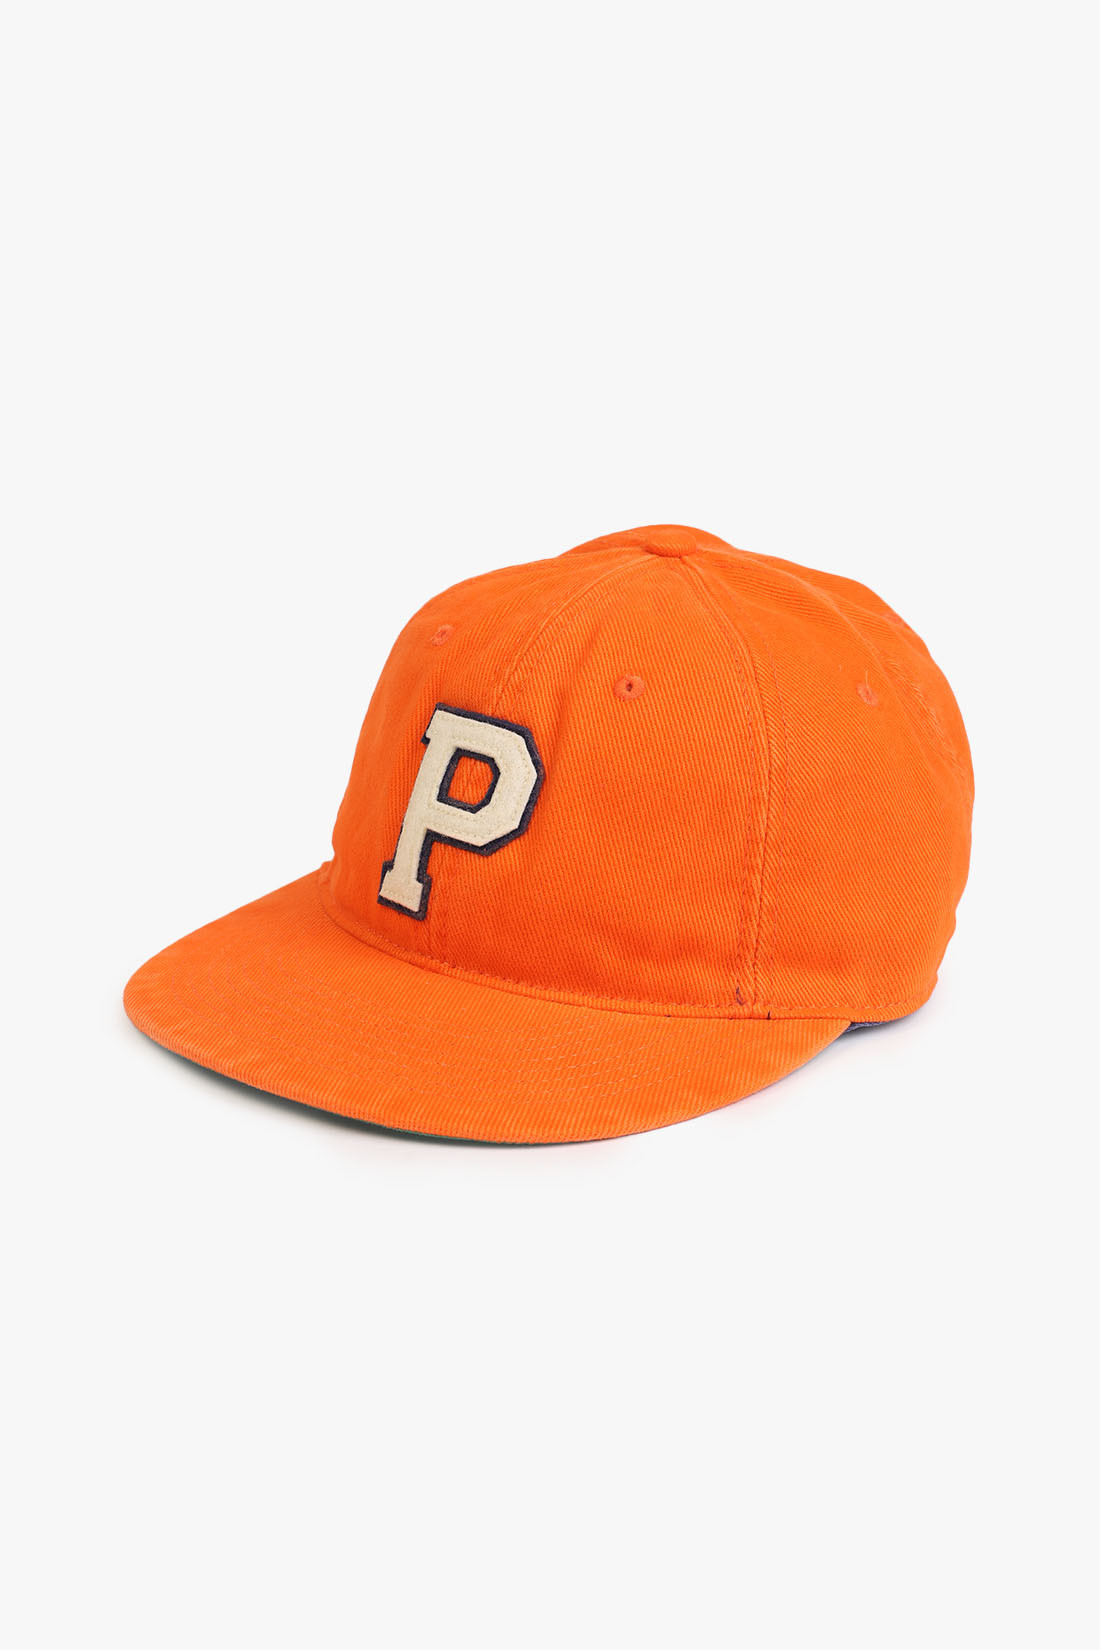 Authentic baseball cap twill Sailing orange